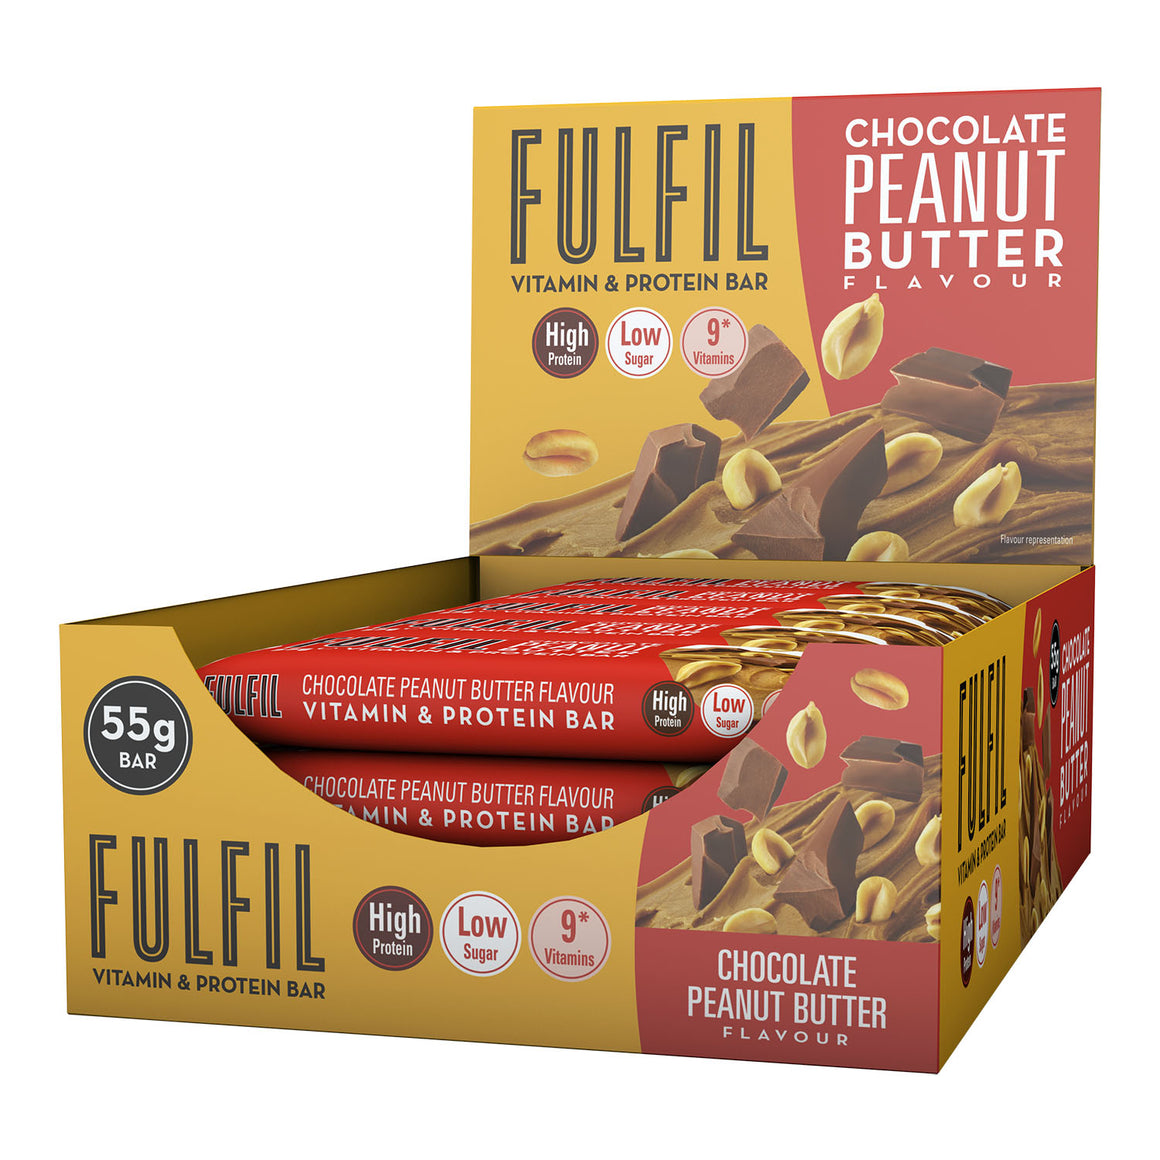 Fulfil Chocolate Peanut Butter Flavour - Vitamin & Protein Bar, Low Sugar, High Protein, 9 Vitamins, 55gm x 15 Bars